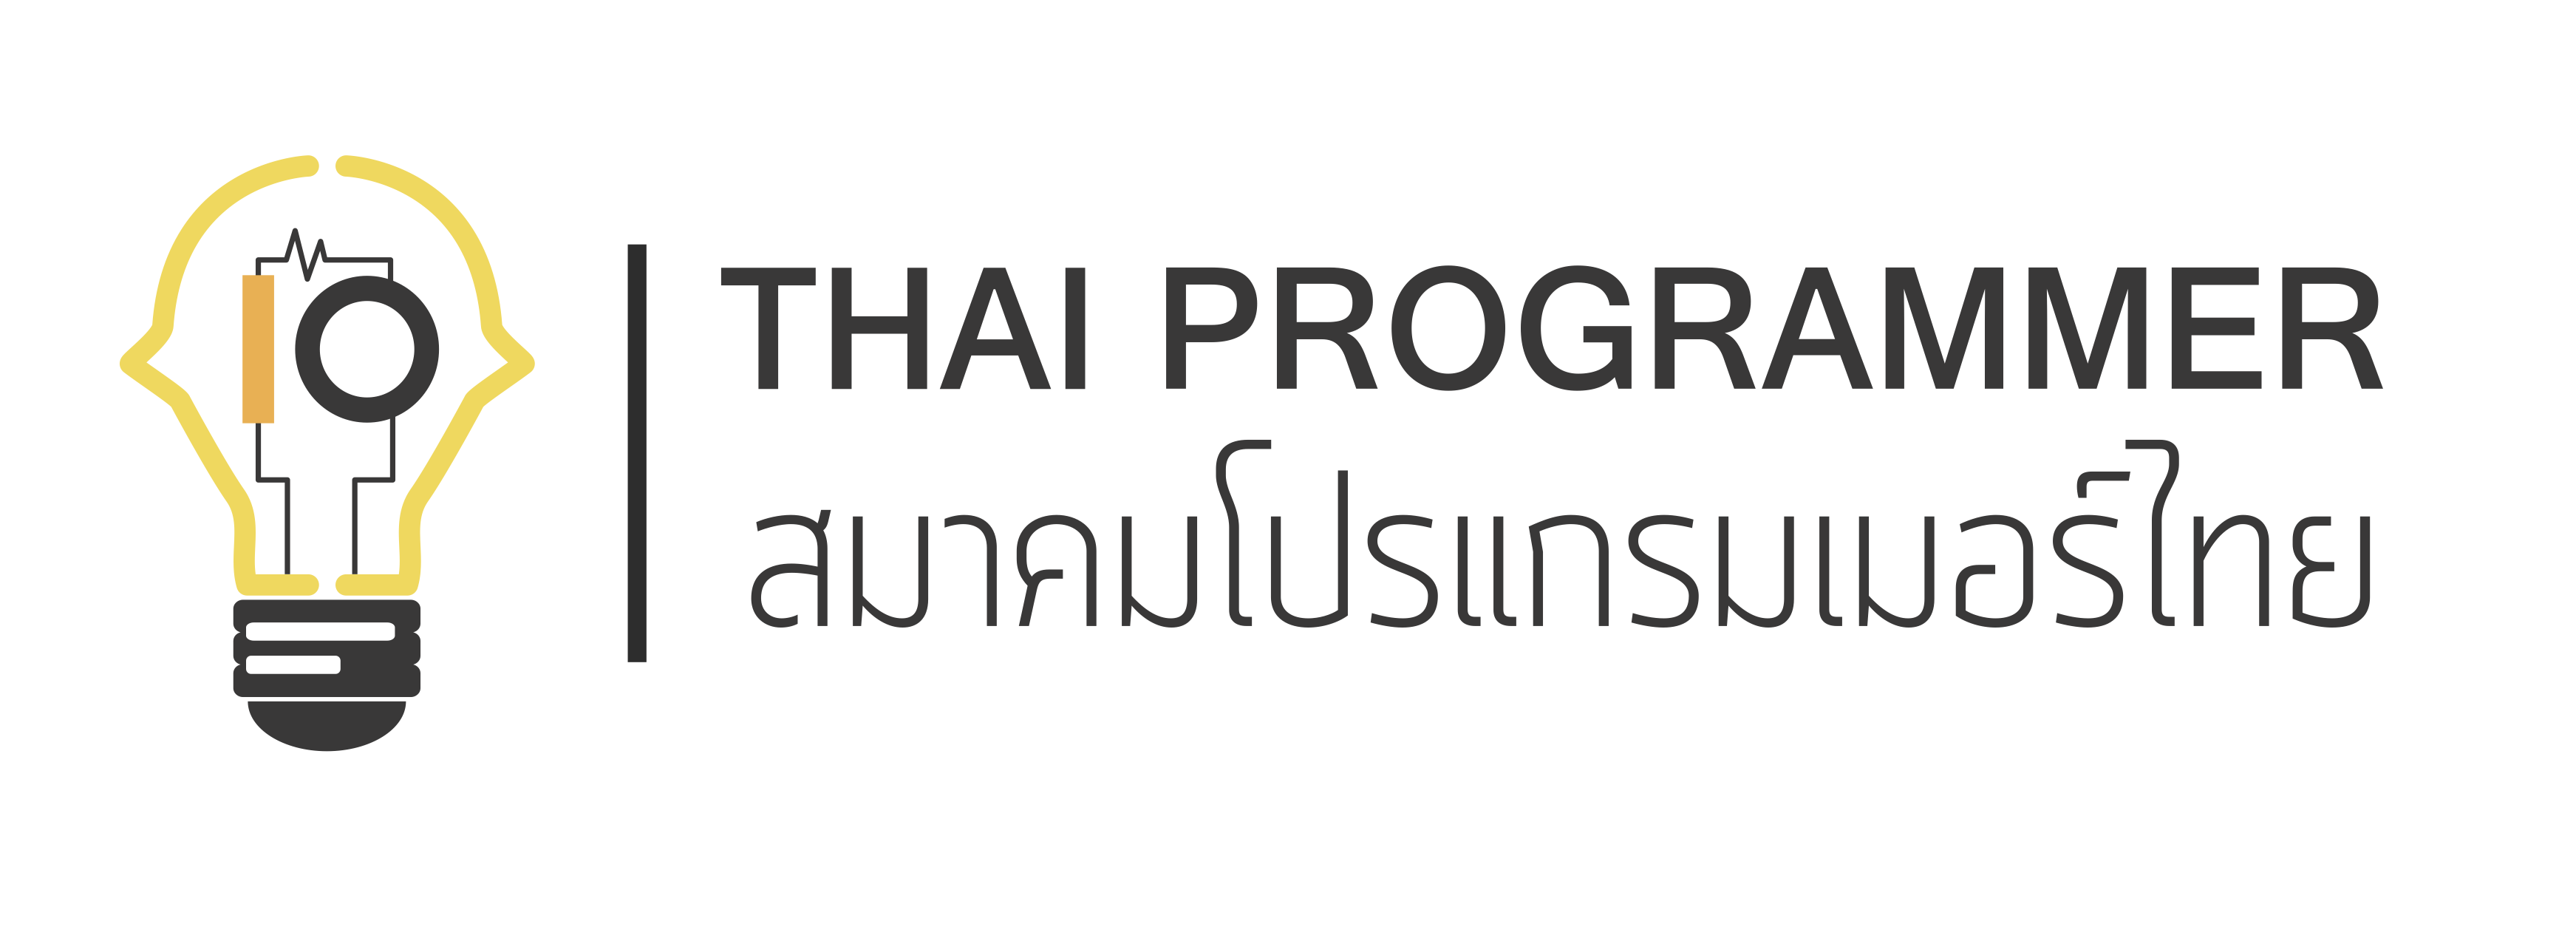 Thai Programmer's Association